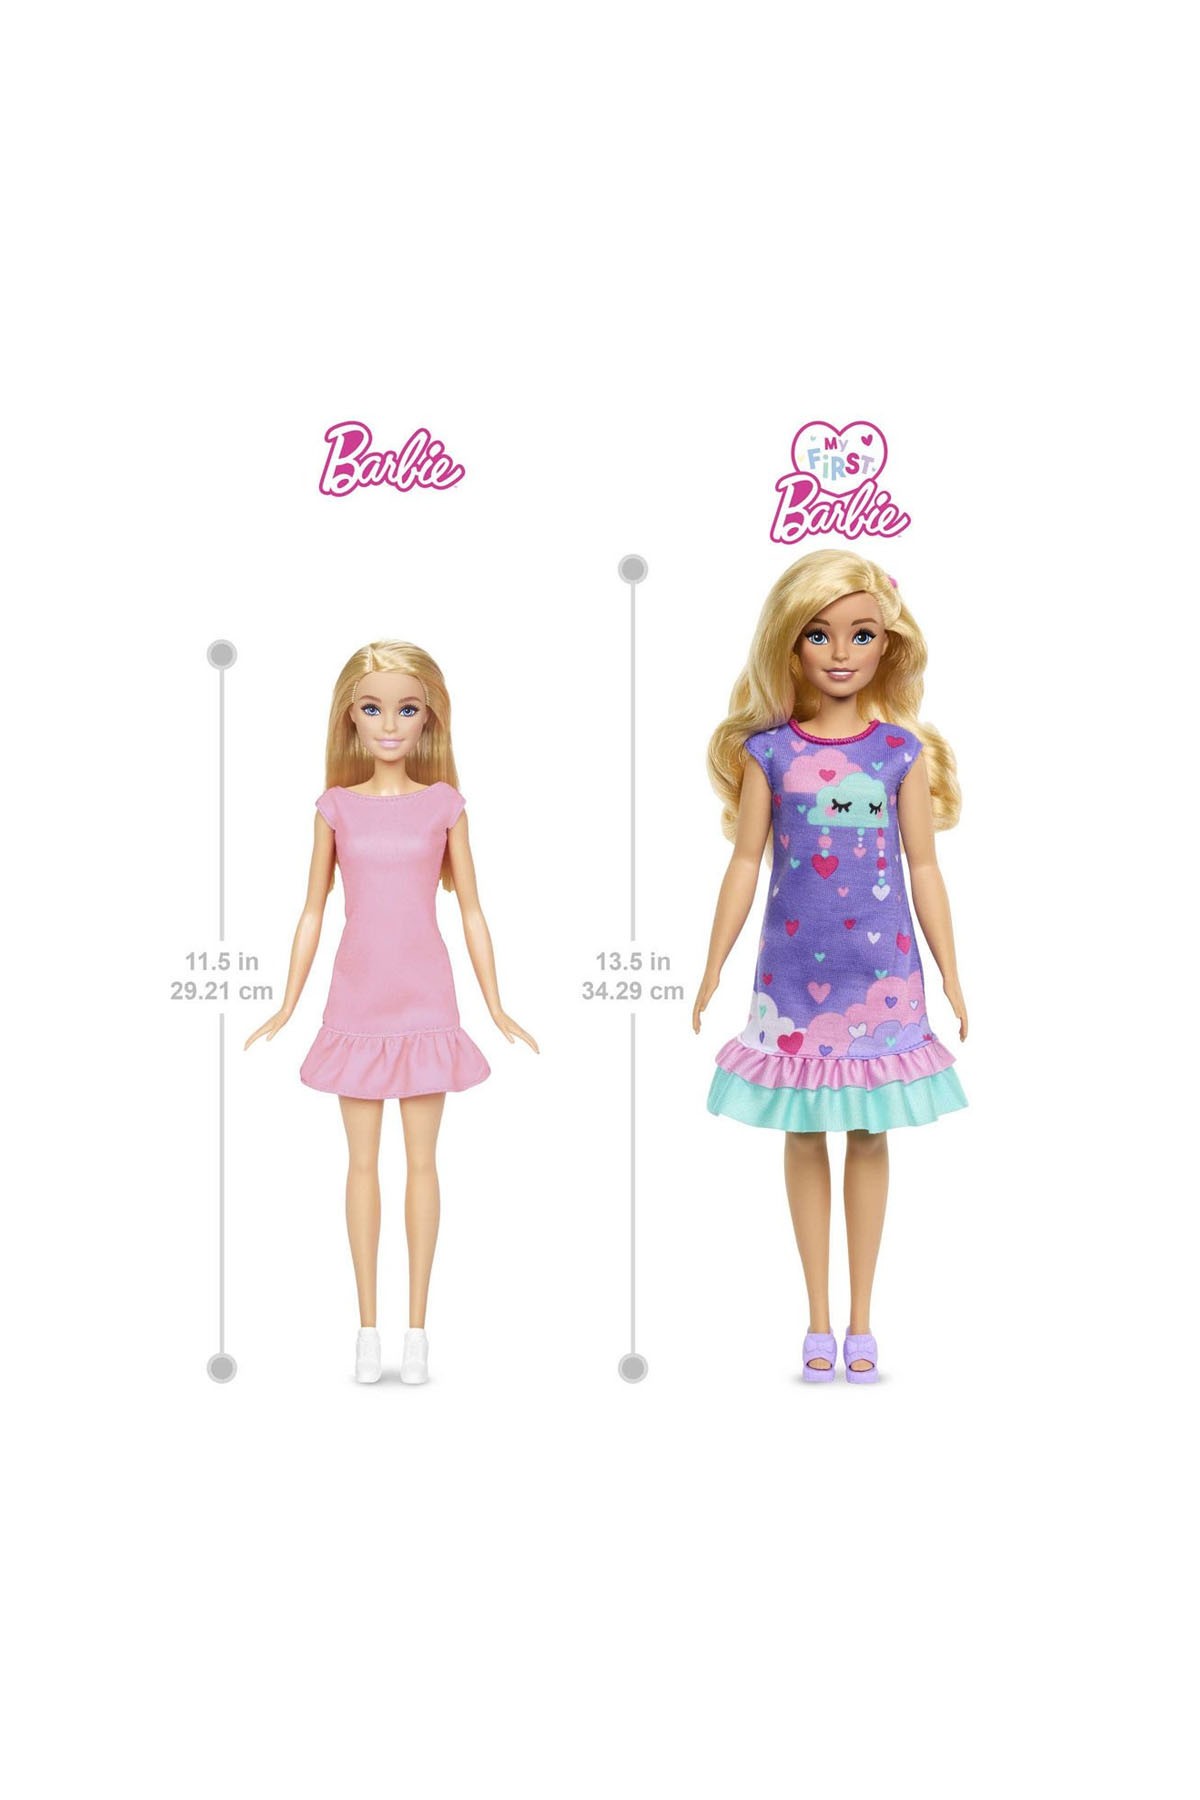 Barbie My First Barbie İlk Barbie Bebeğim Delüks Bebek HMM66